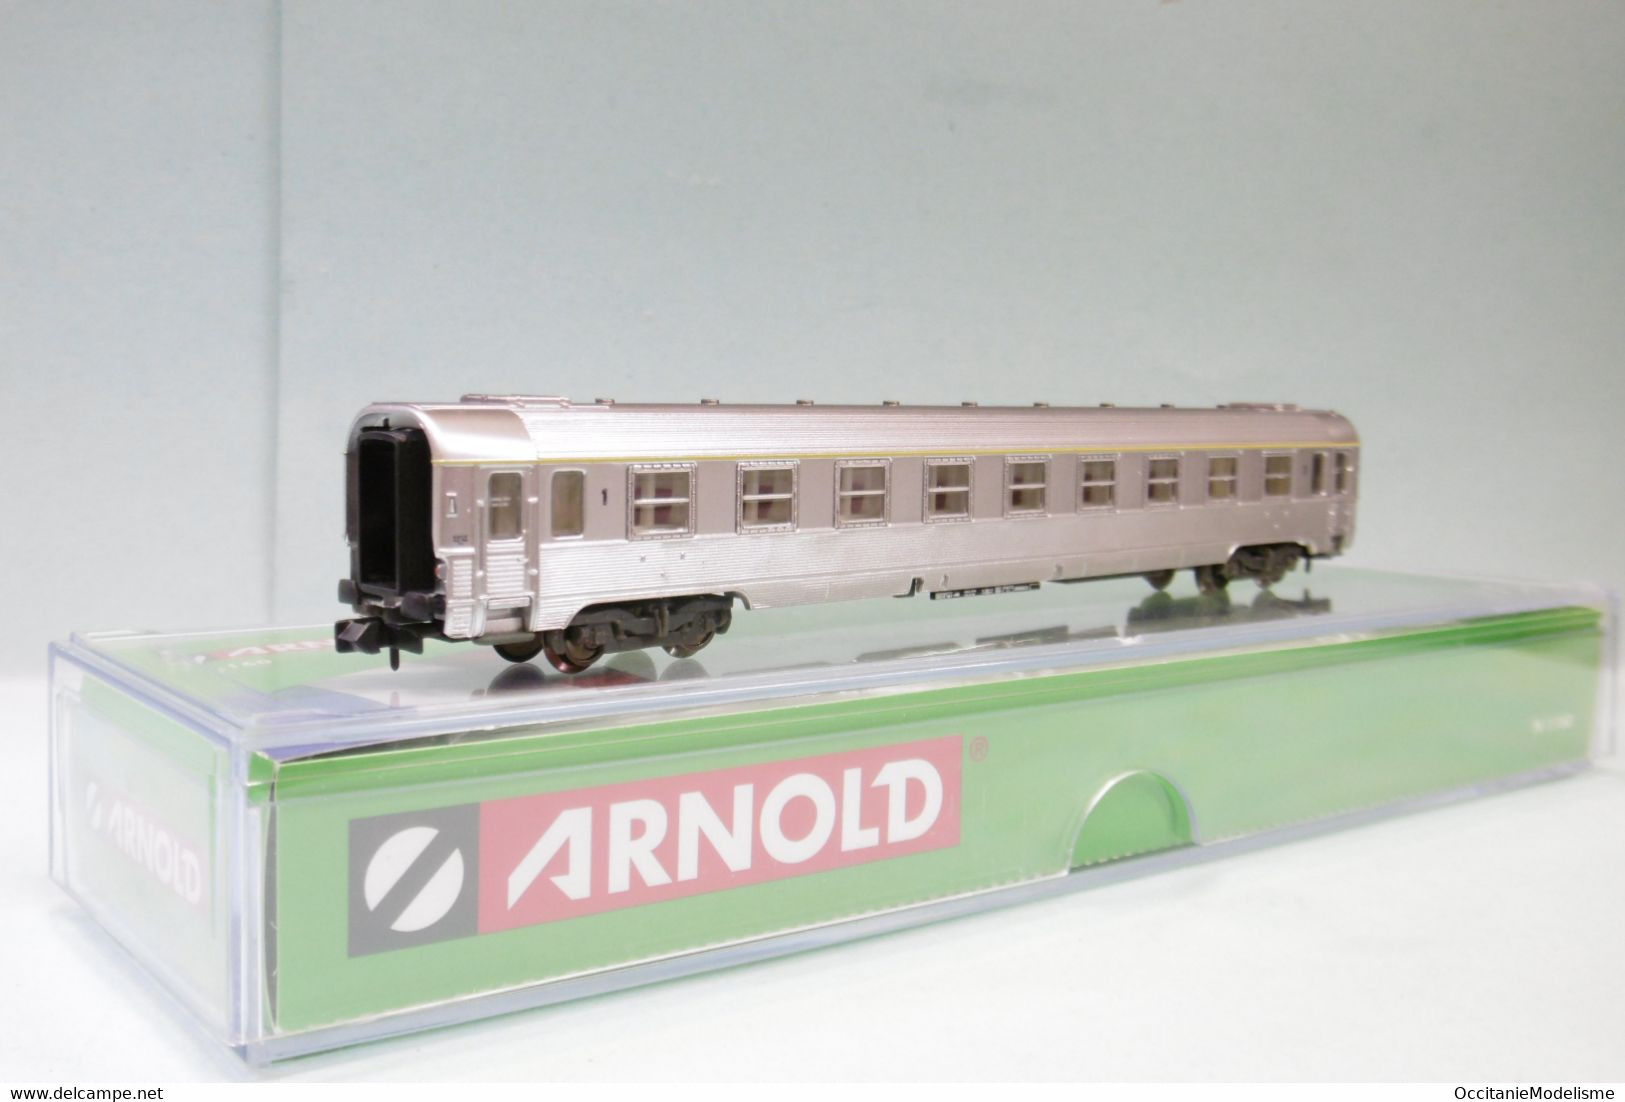 Arnold - Voiture DEV INOX A9 1ère Classe SNCF ép. III Réf. HN4323 Neuf N 1/160 - Passagierwagen